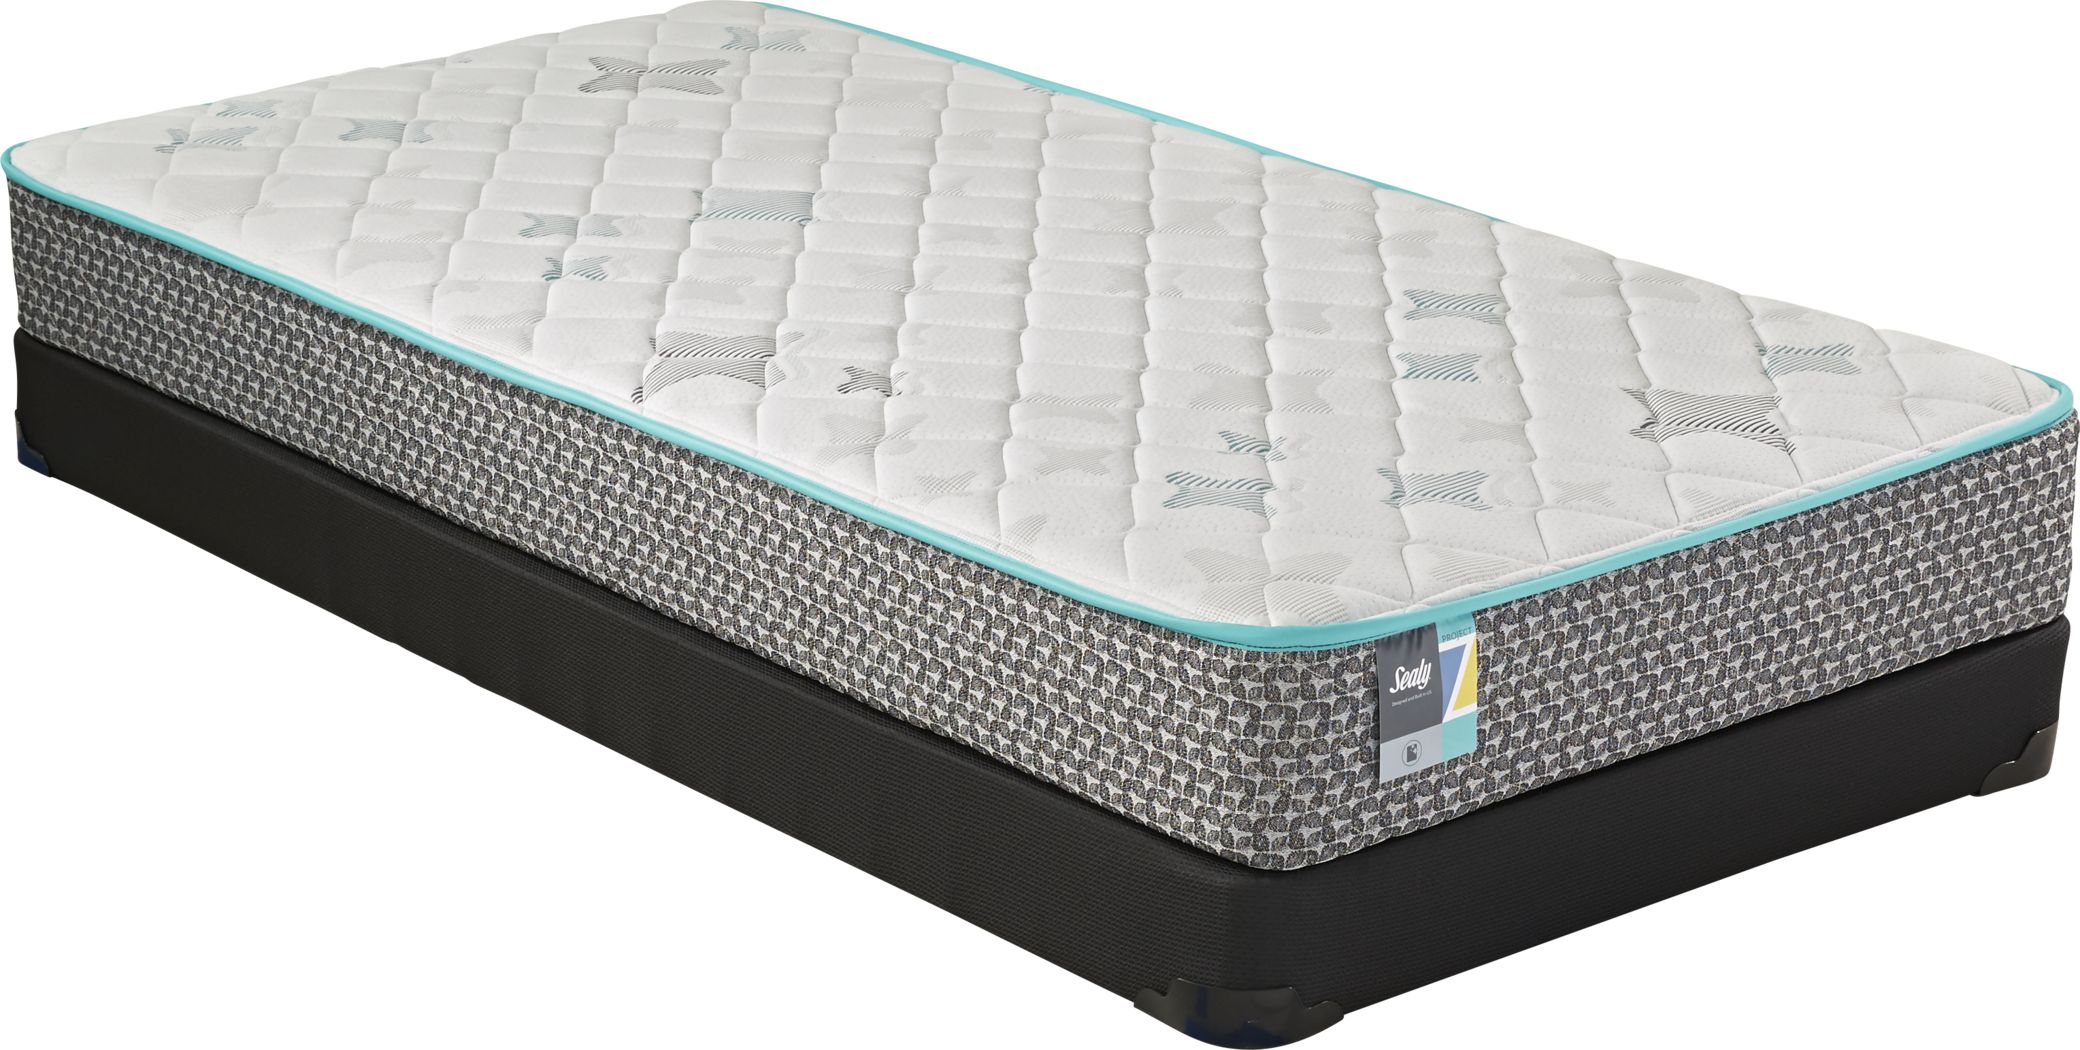 low twin mattress platform